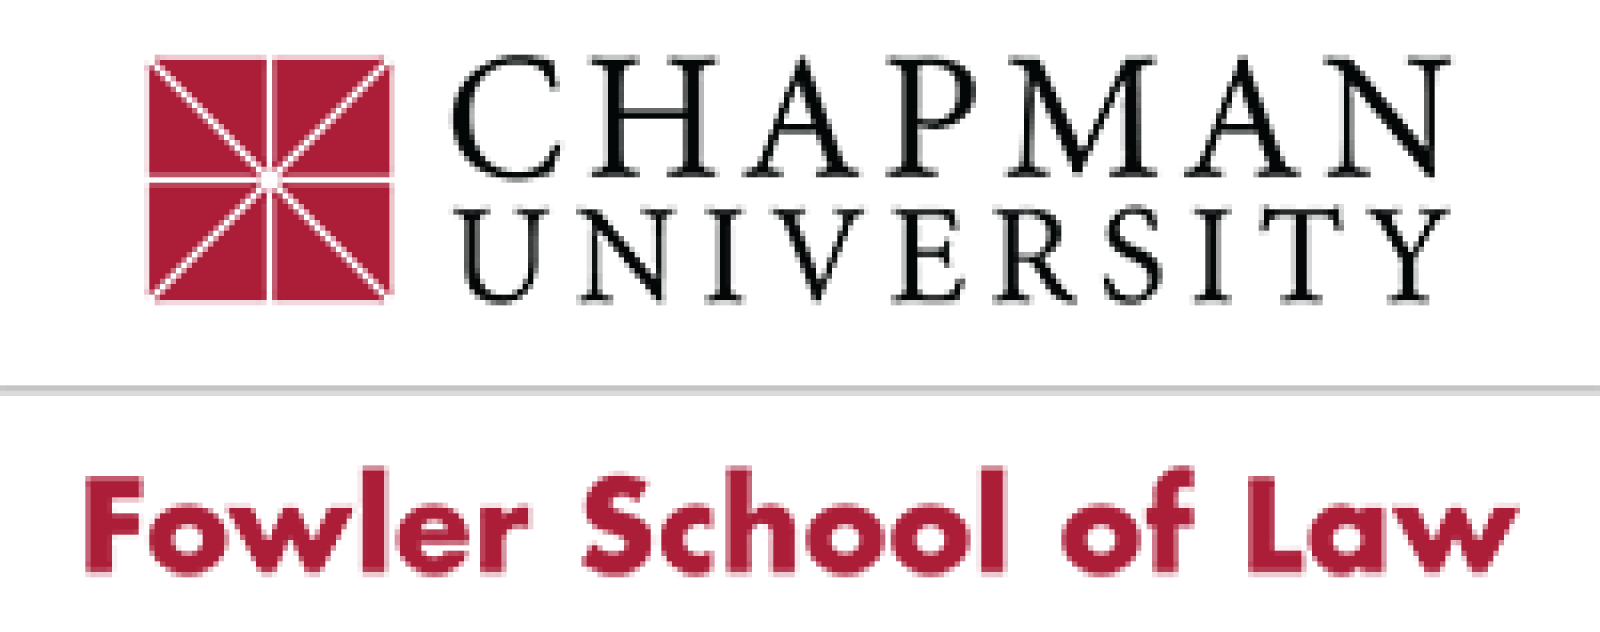 Chapman University | Fowler School of Law